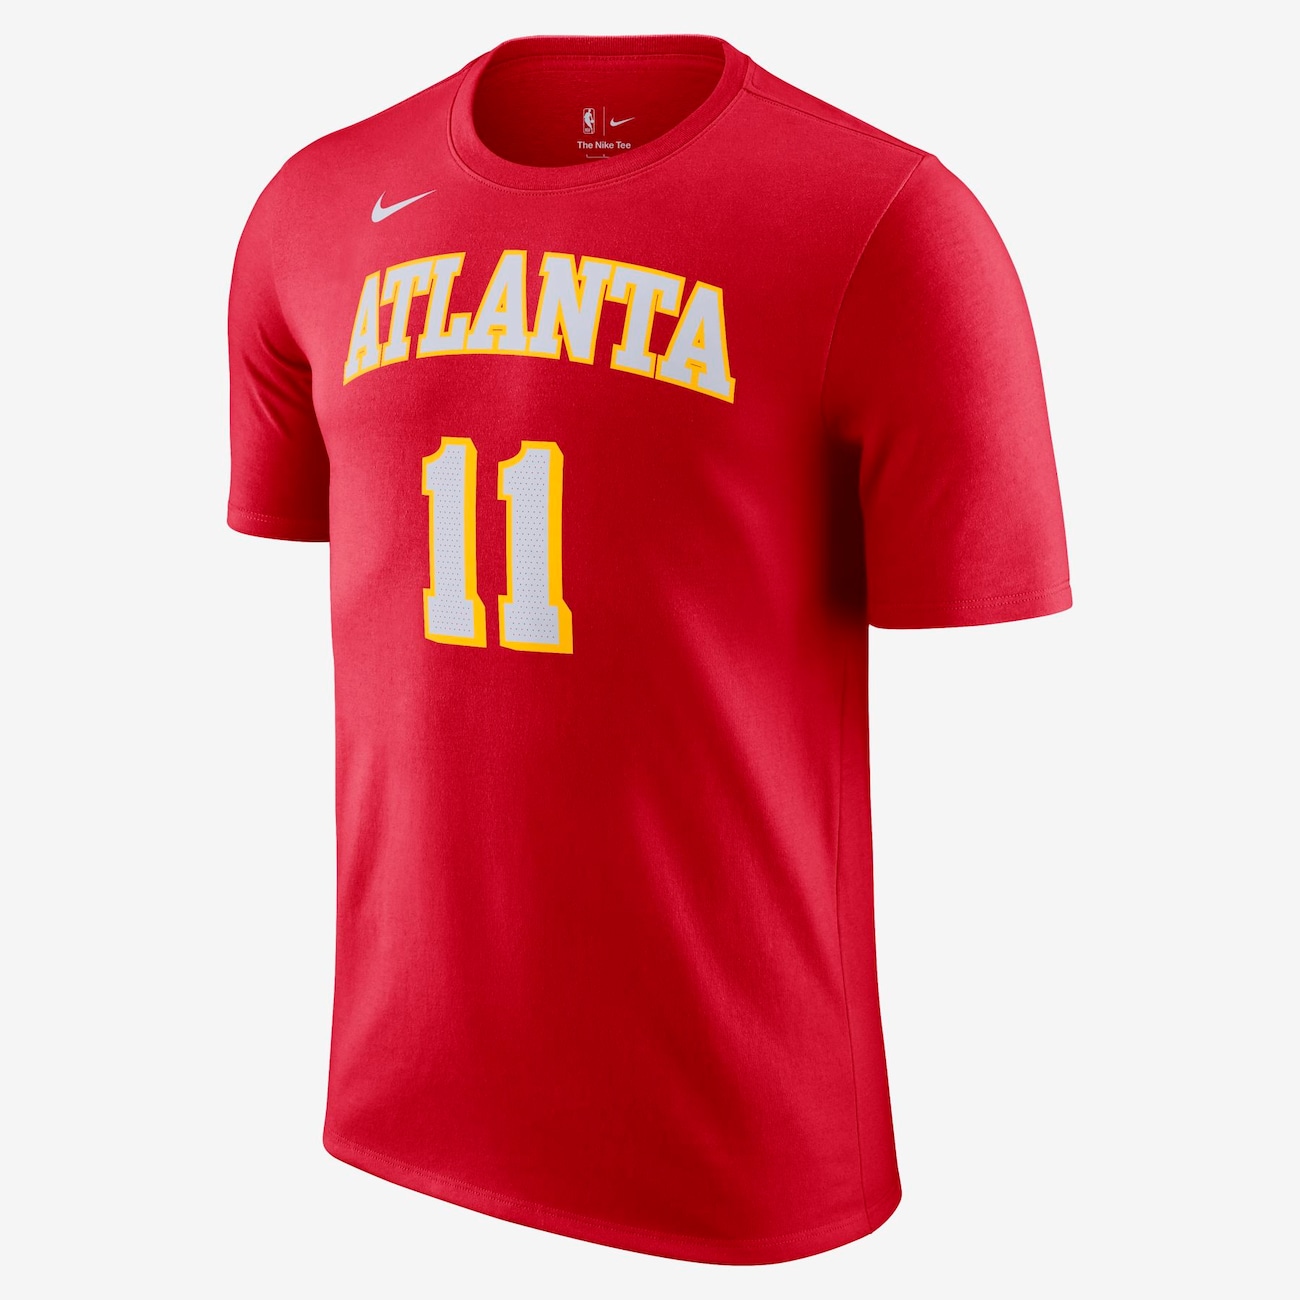 Atlanta Hawks Camiseta Nike NBA - Hombre - Rojo